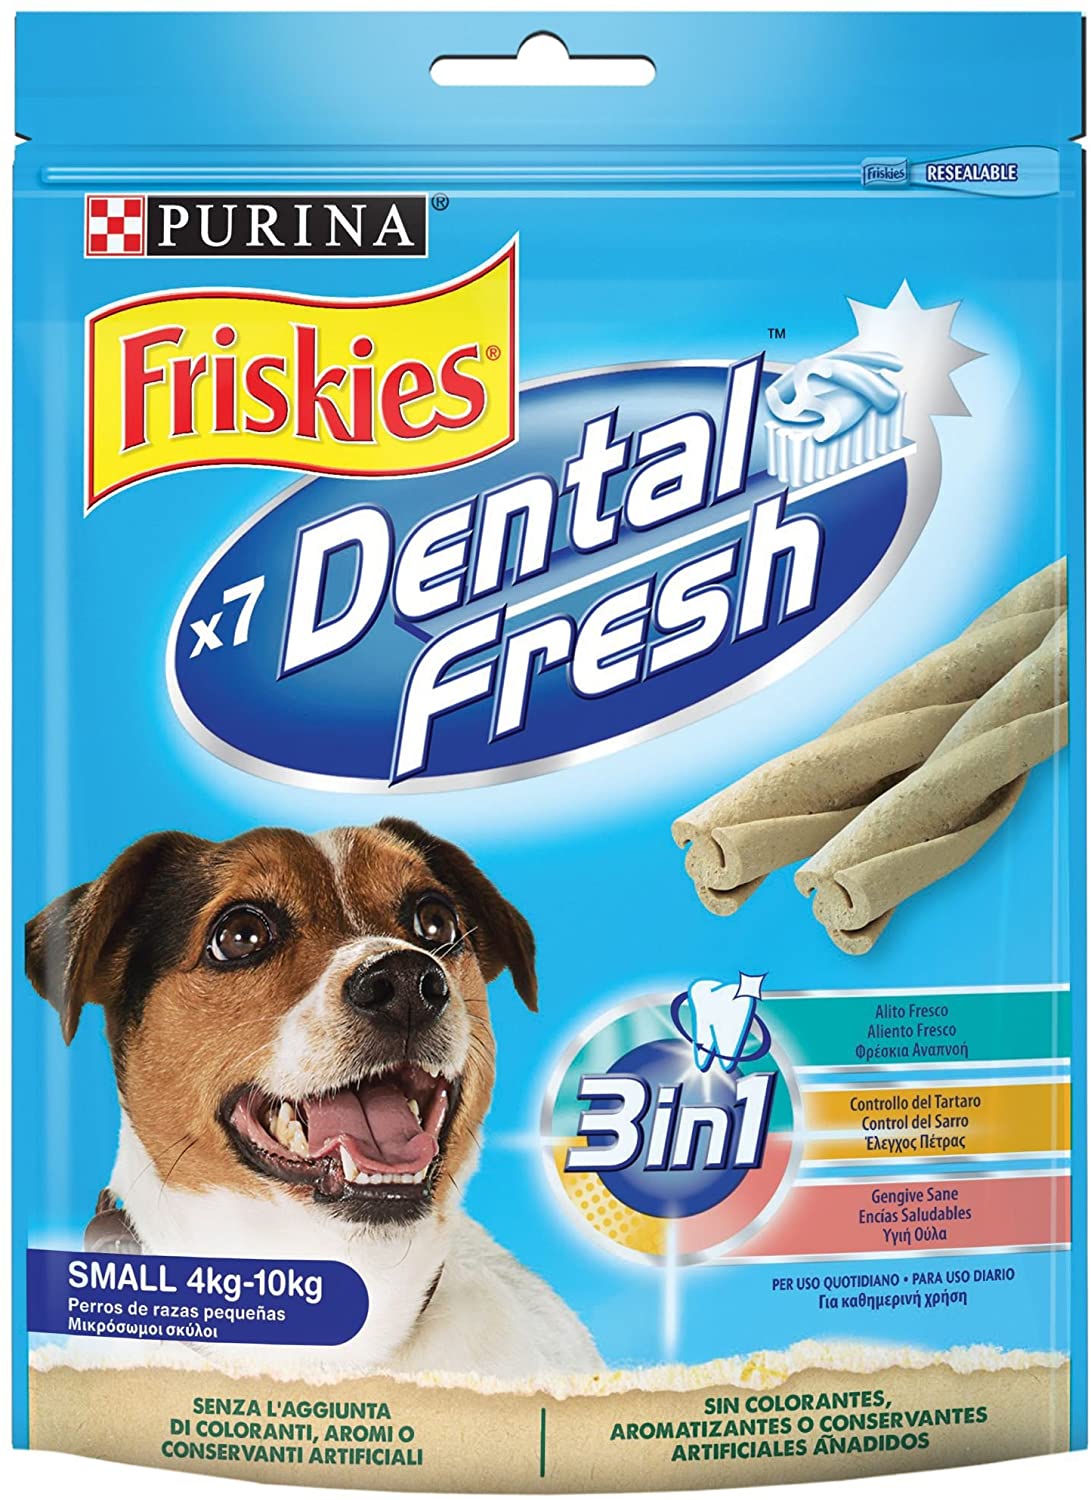  Purina Friskies Dental Fresh golosinas dental para Perro Pequeño 6 x 110 g 